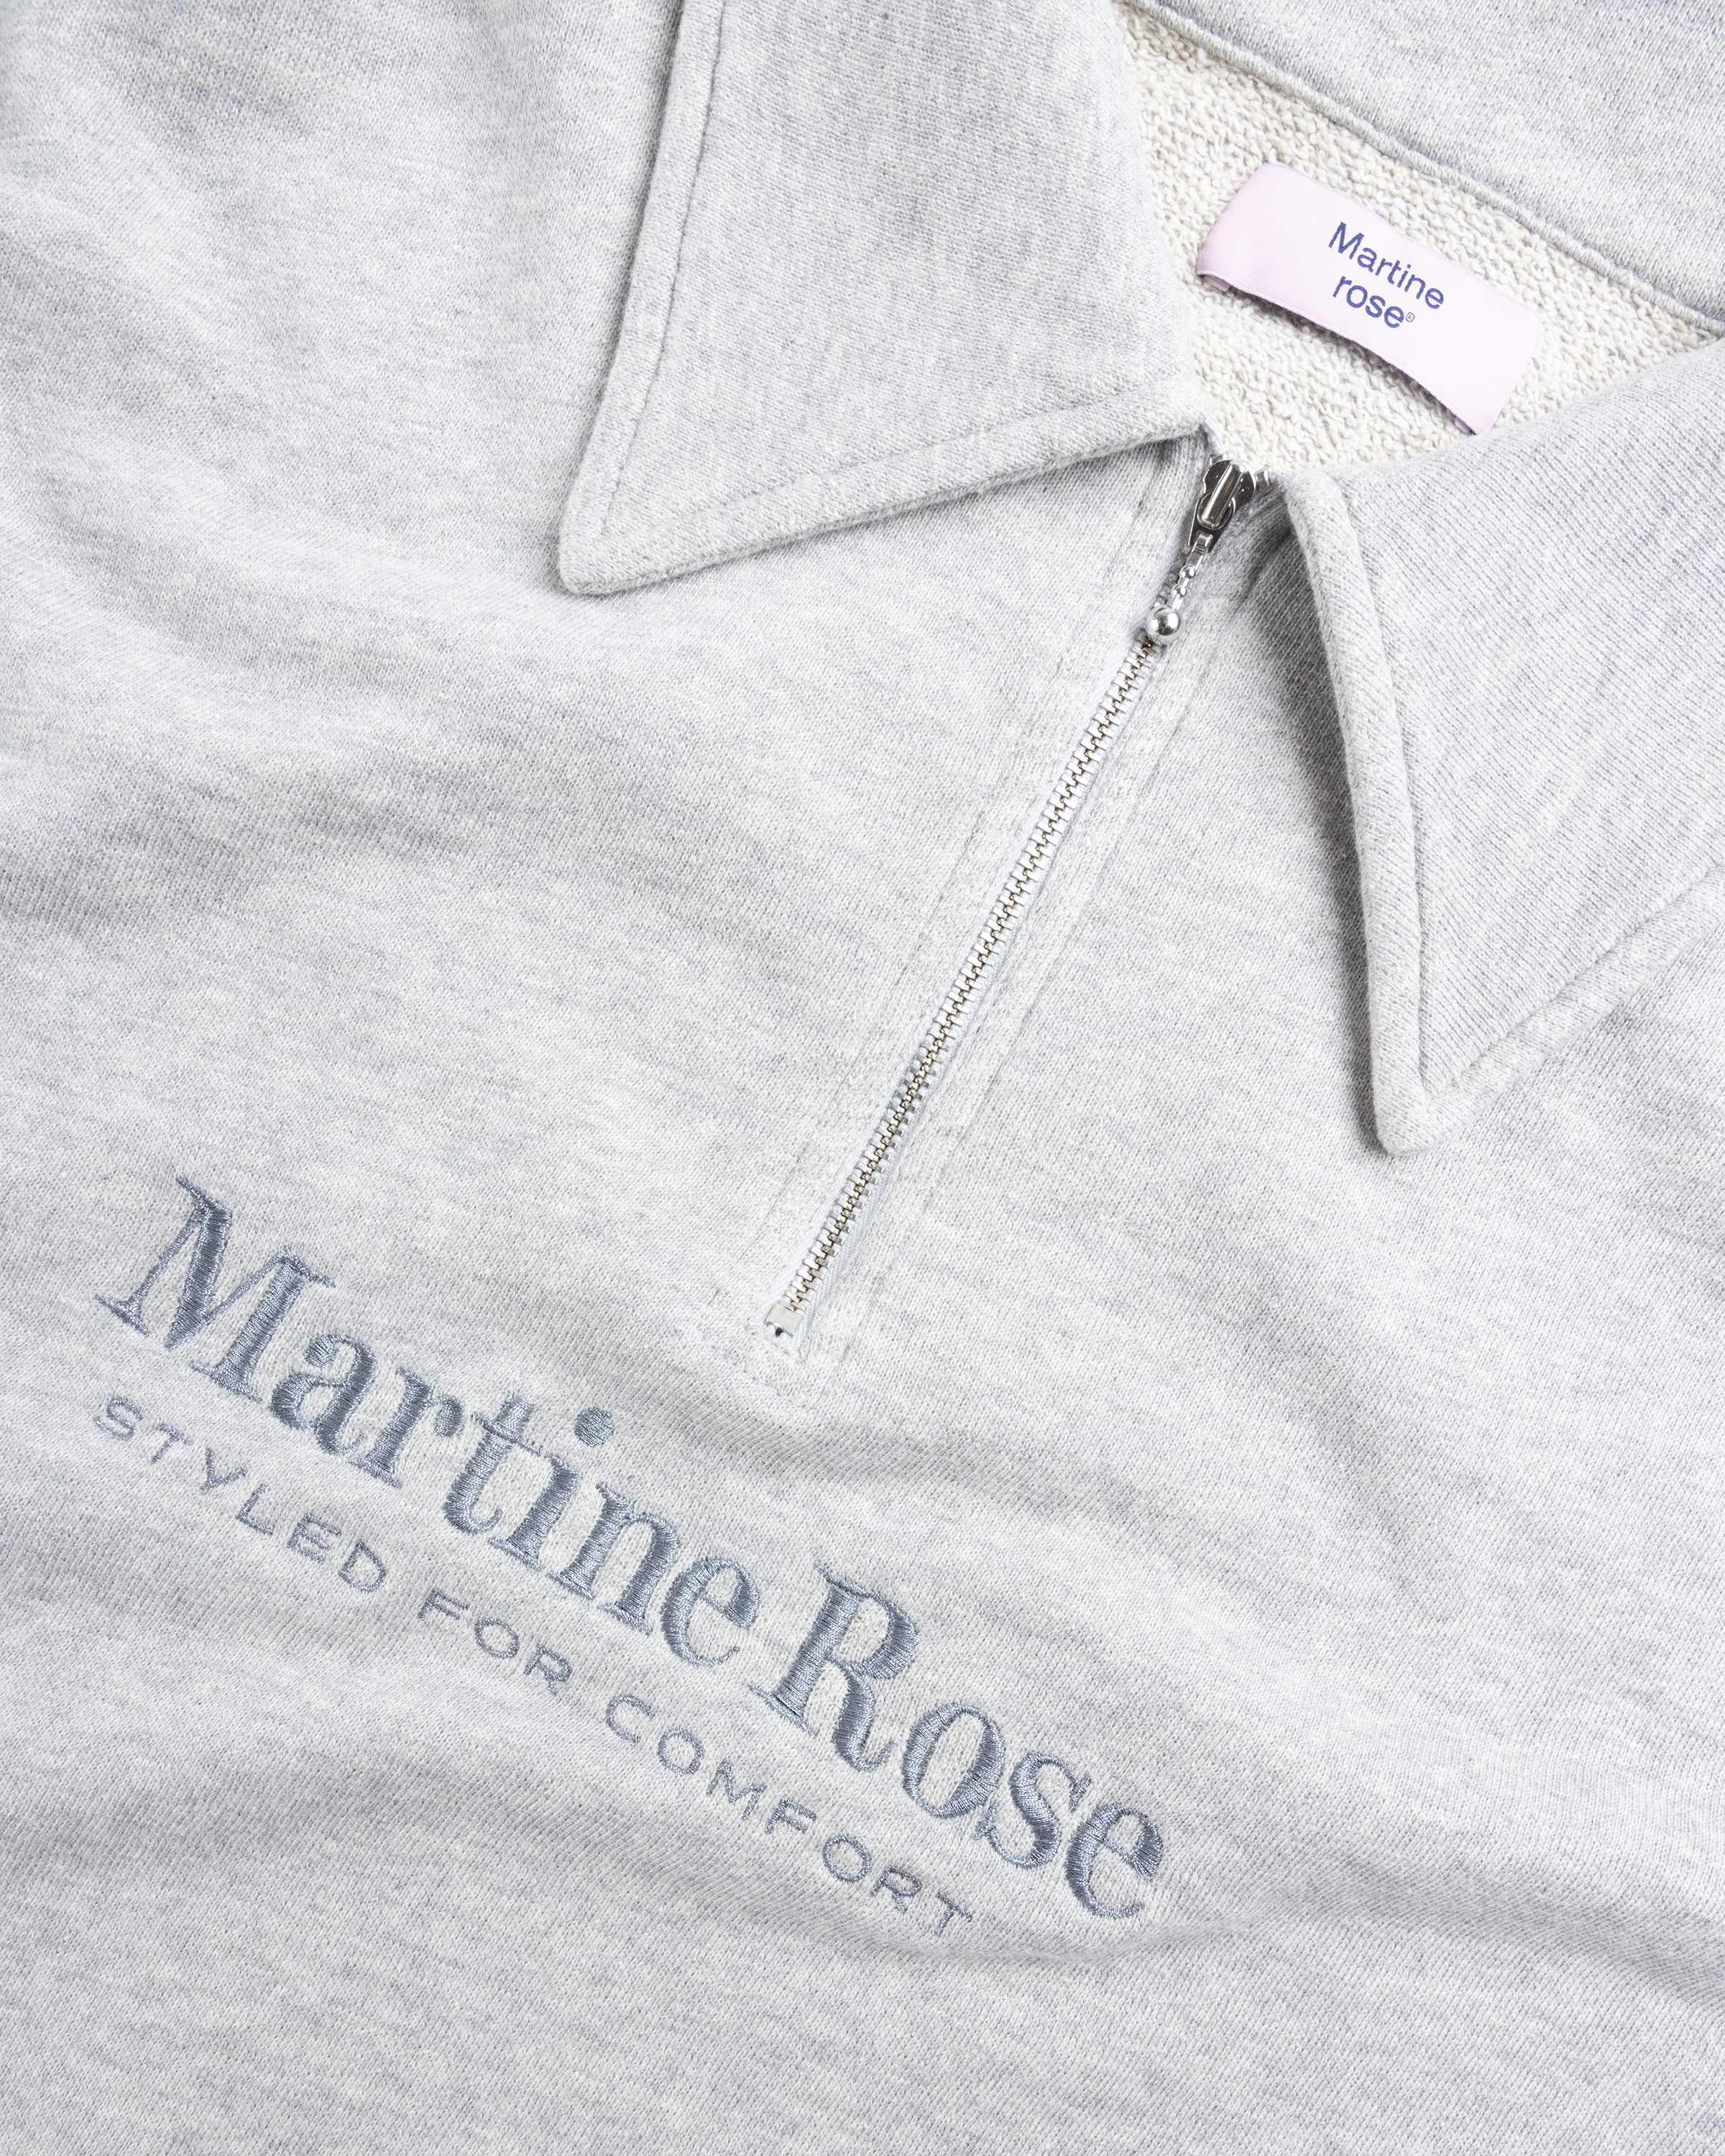 Martine Rose – Zip Up Polo Grey Marl - Polos - Grey - Image 6